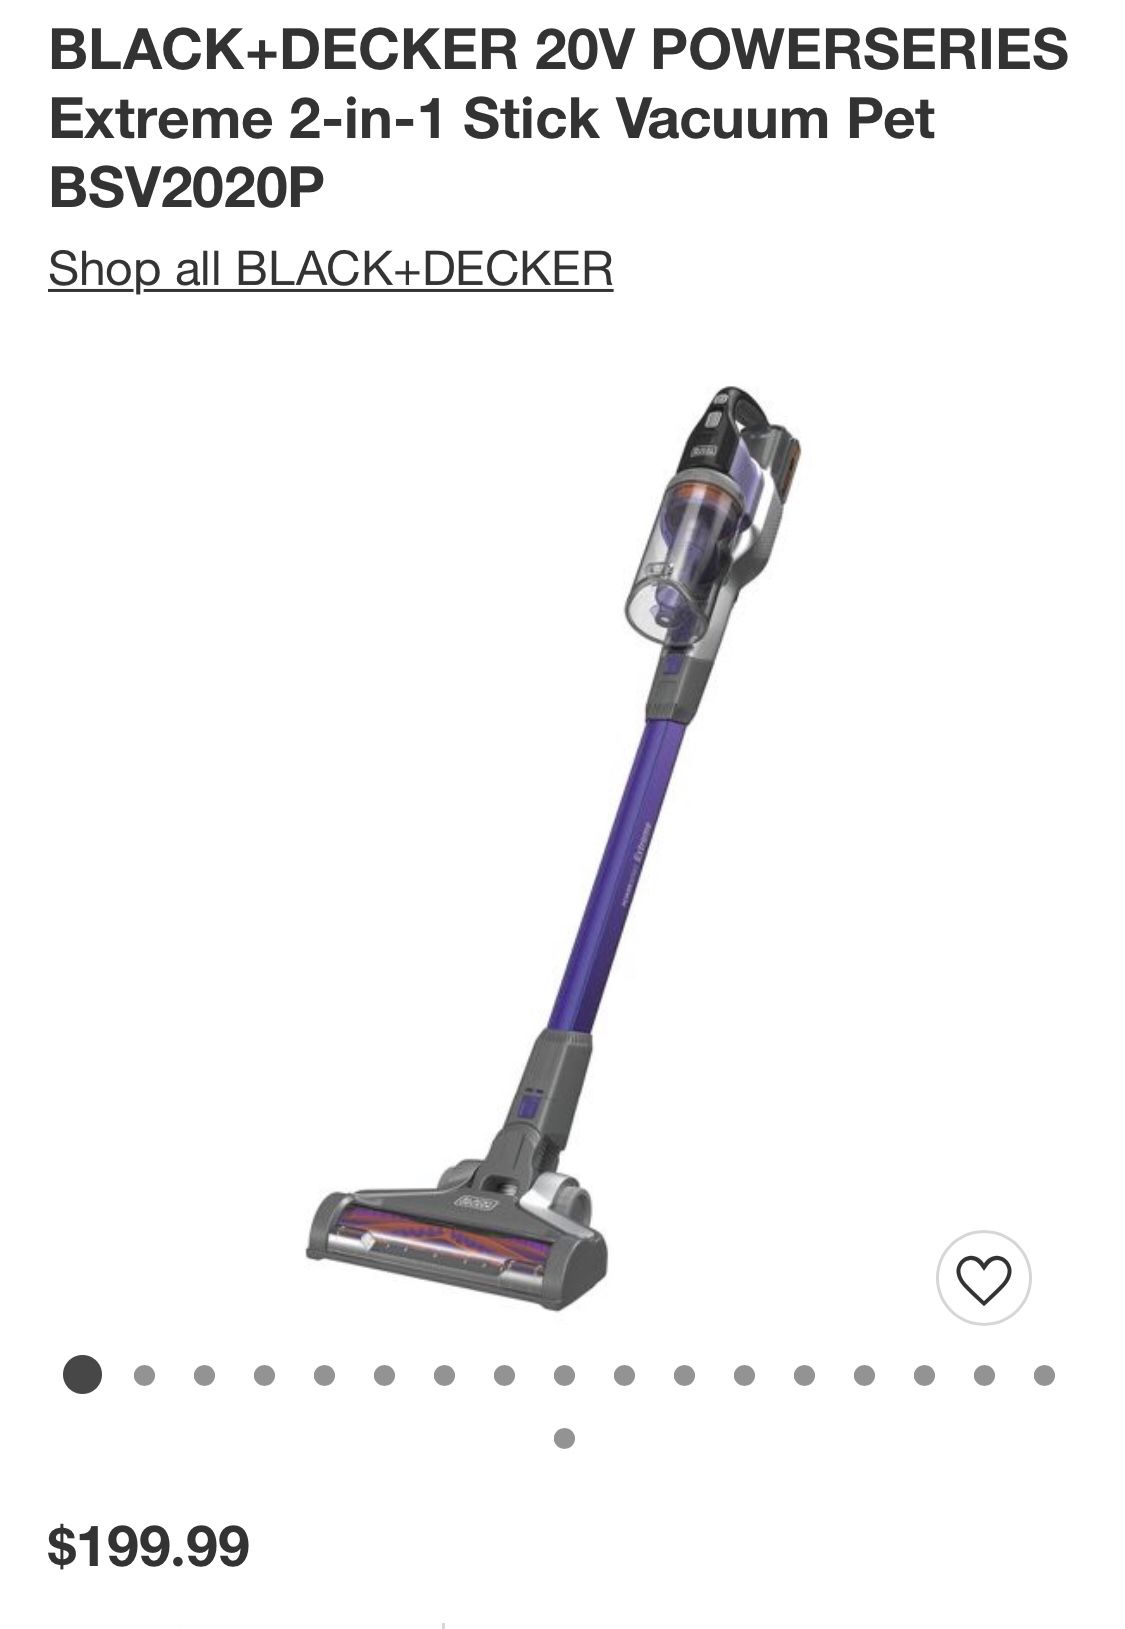 Black n Decker 20V 2-1 stick vacuum